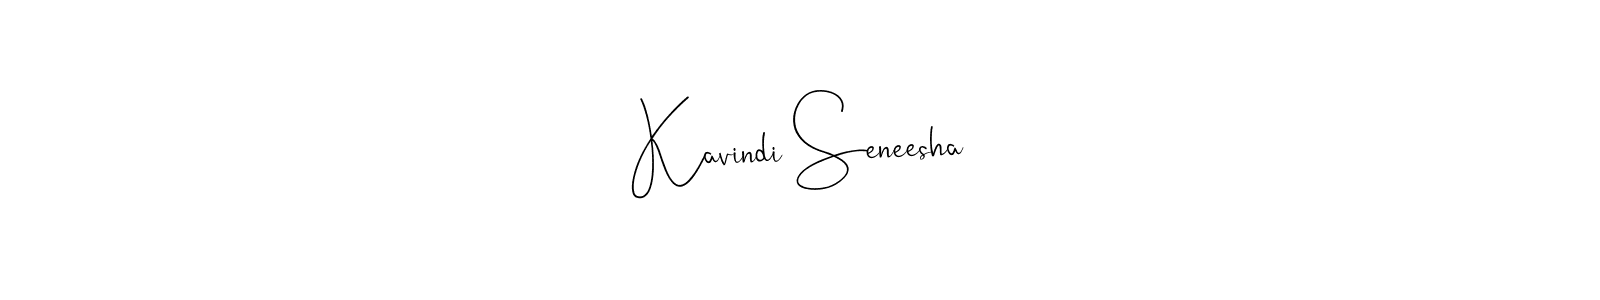 Make a beautiful signature design for name Kavindi Seneesha. Use this online signature maker to create a handwritten signature for free. Kavindi Seneesha signature style 4 images and pictures png